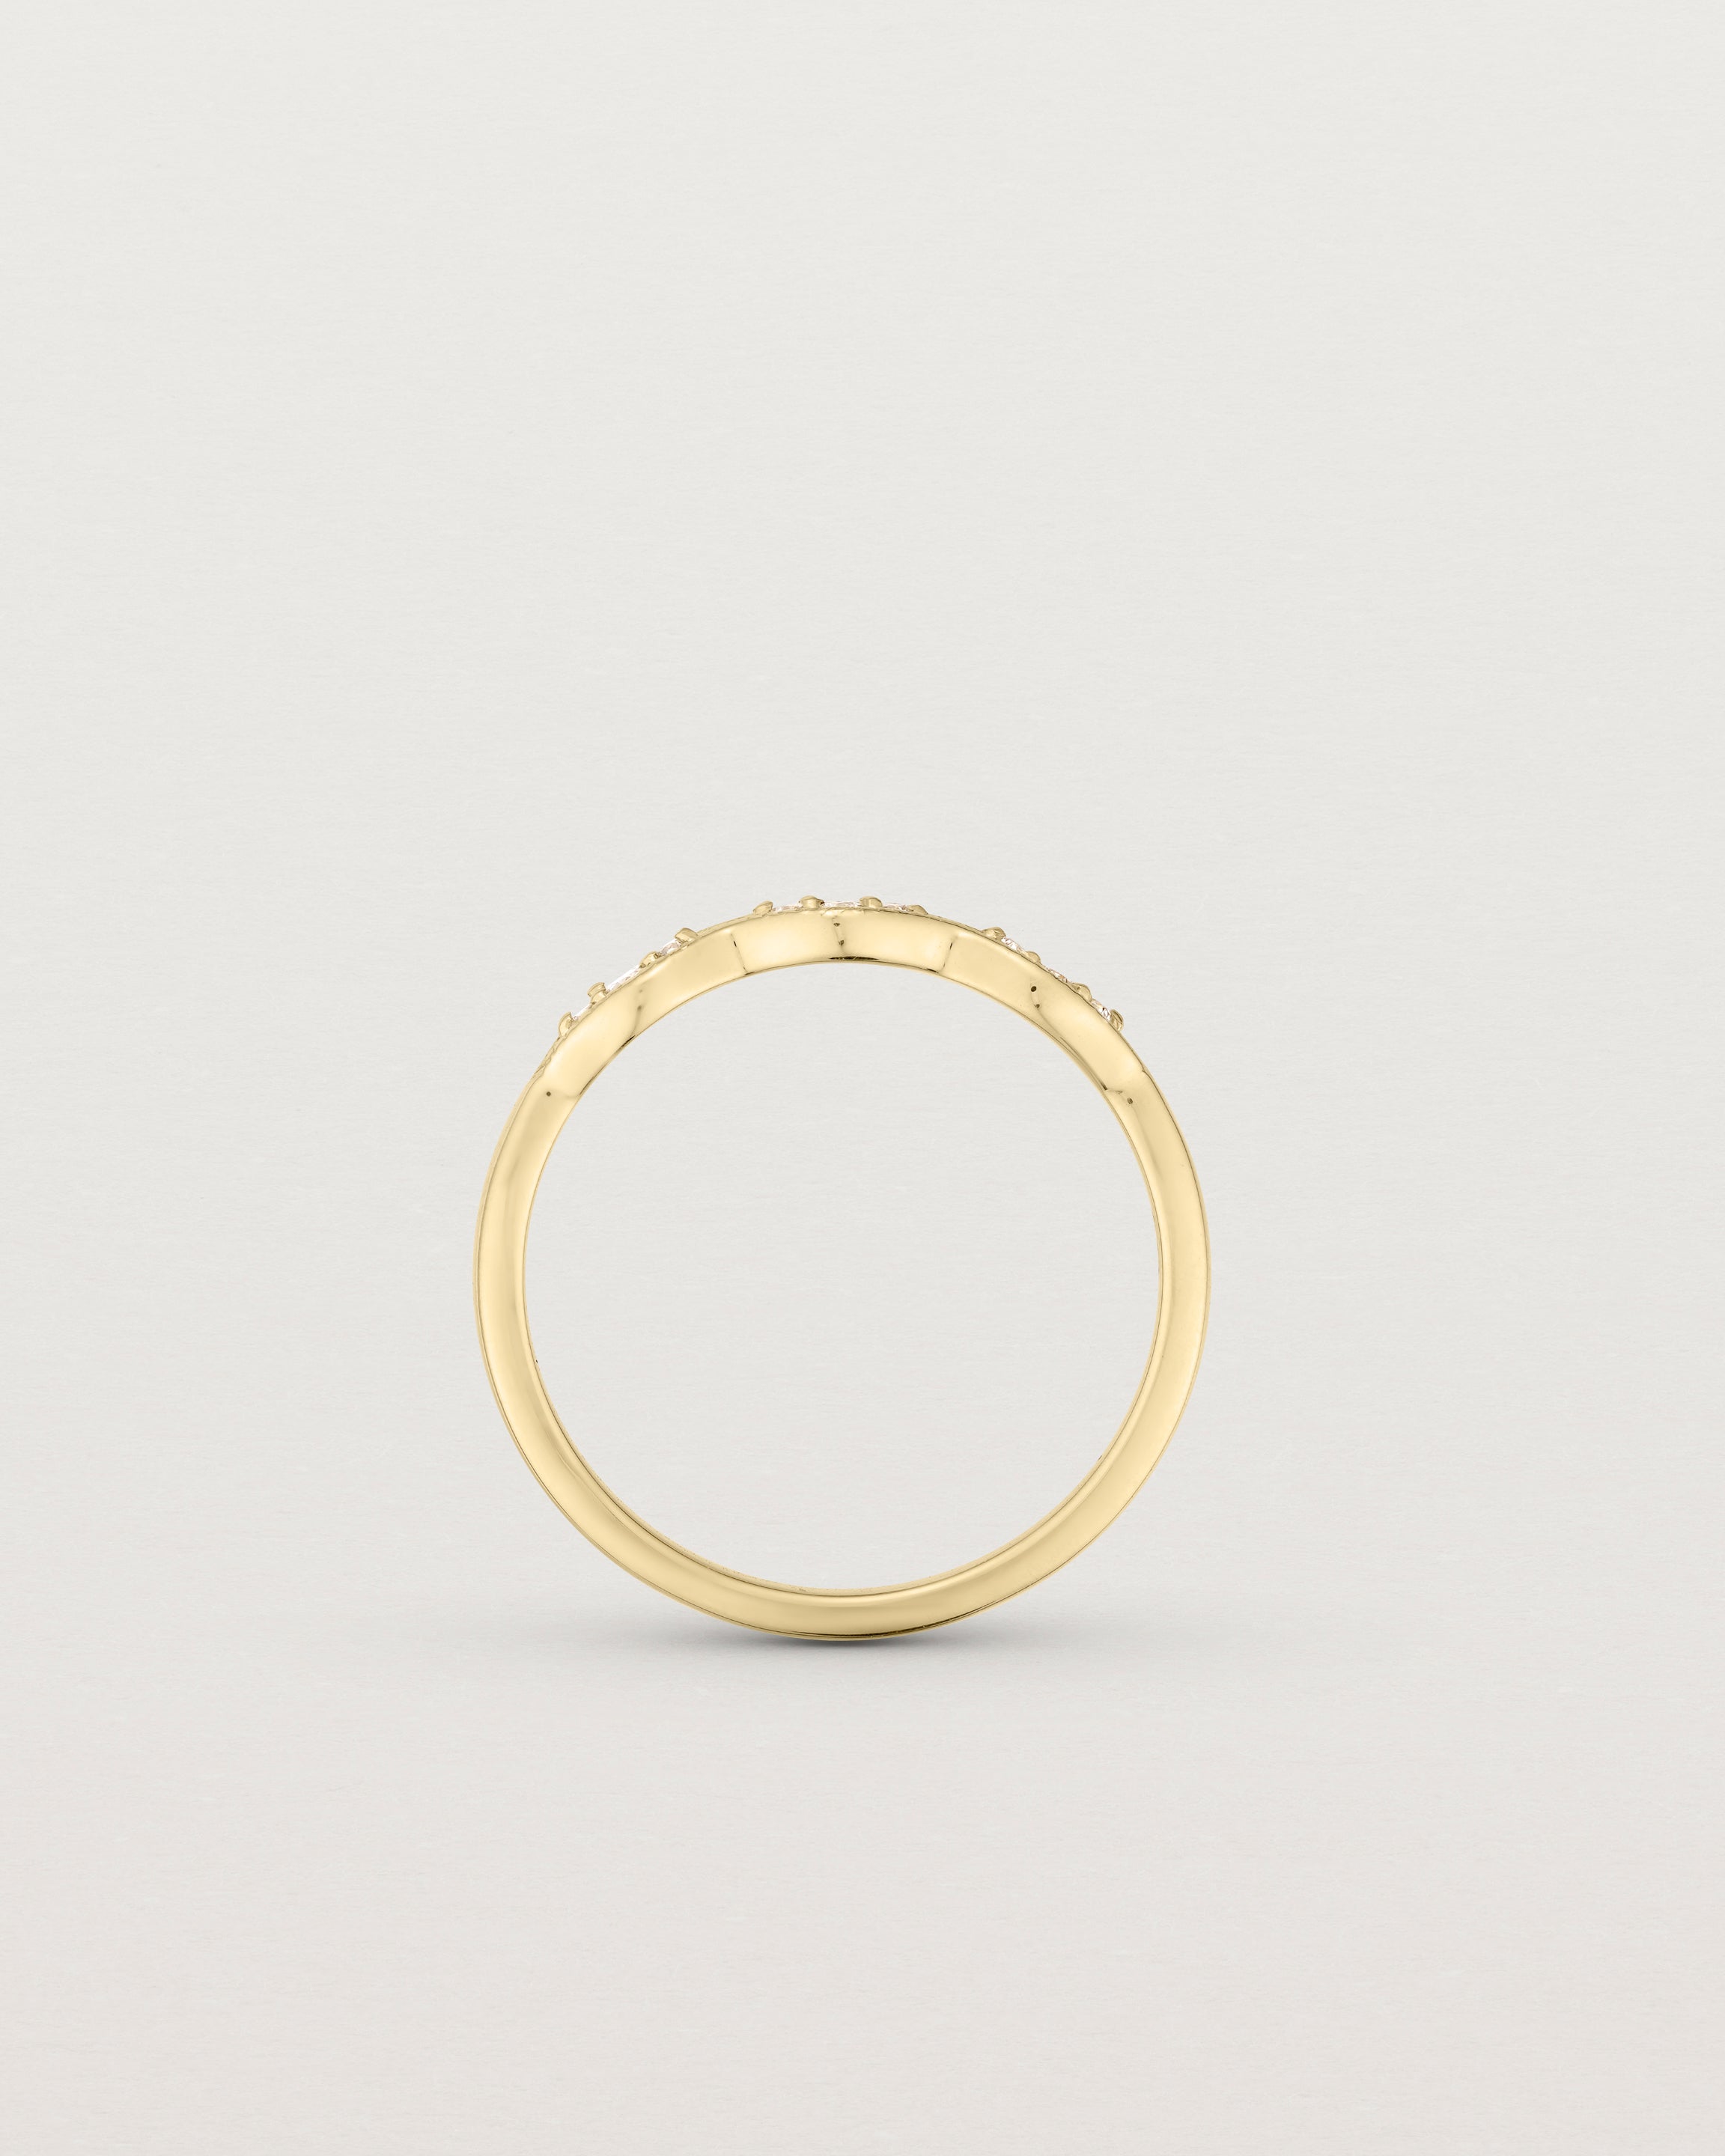 Nessa Ring | Vintage Inspired